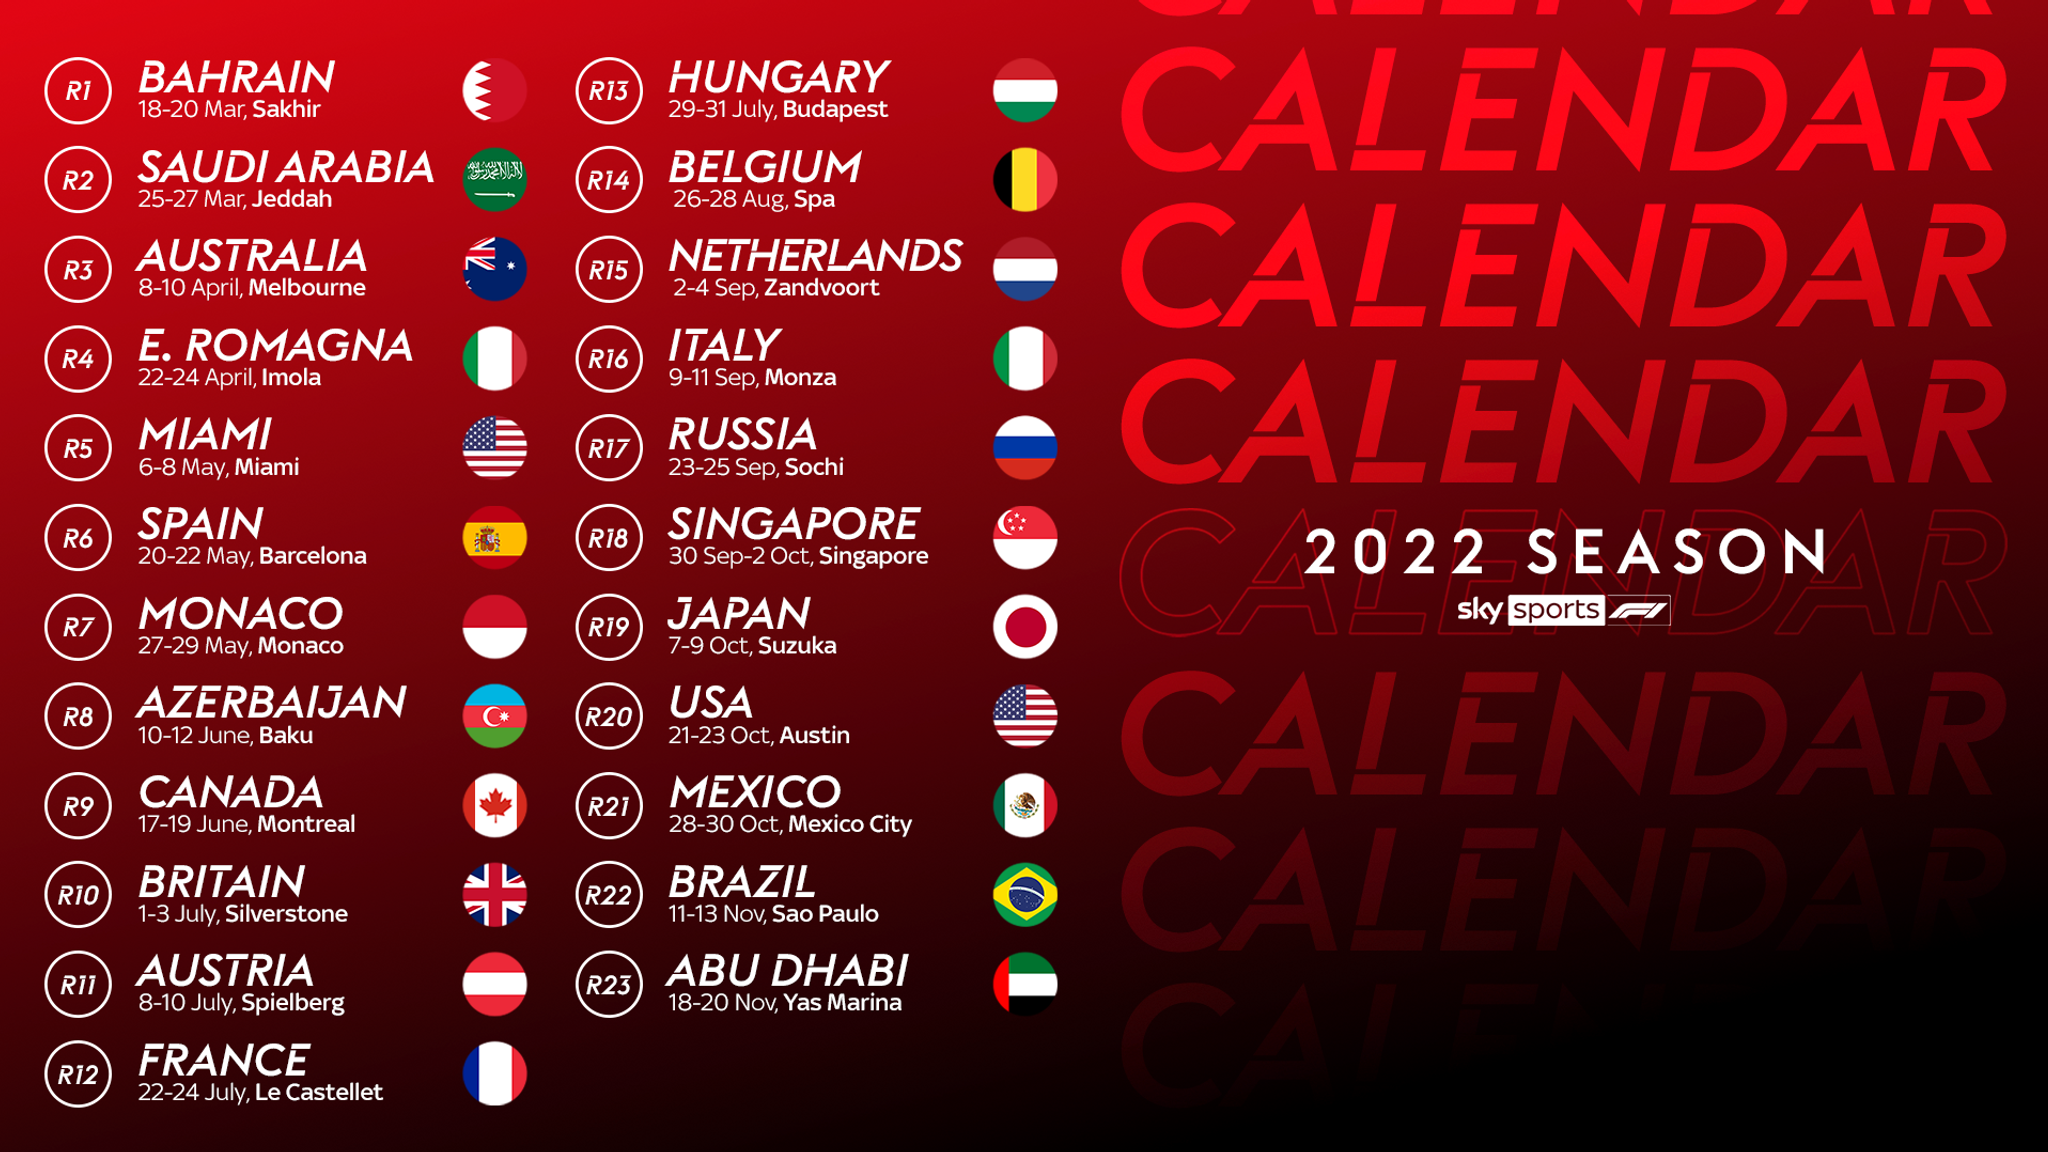 F1 2022 Calendar Formula 1 In 2022: Race Calendar And Schedule; Car Launch And Pre-Season  Winter Testing Dates | F1 News